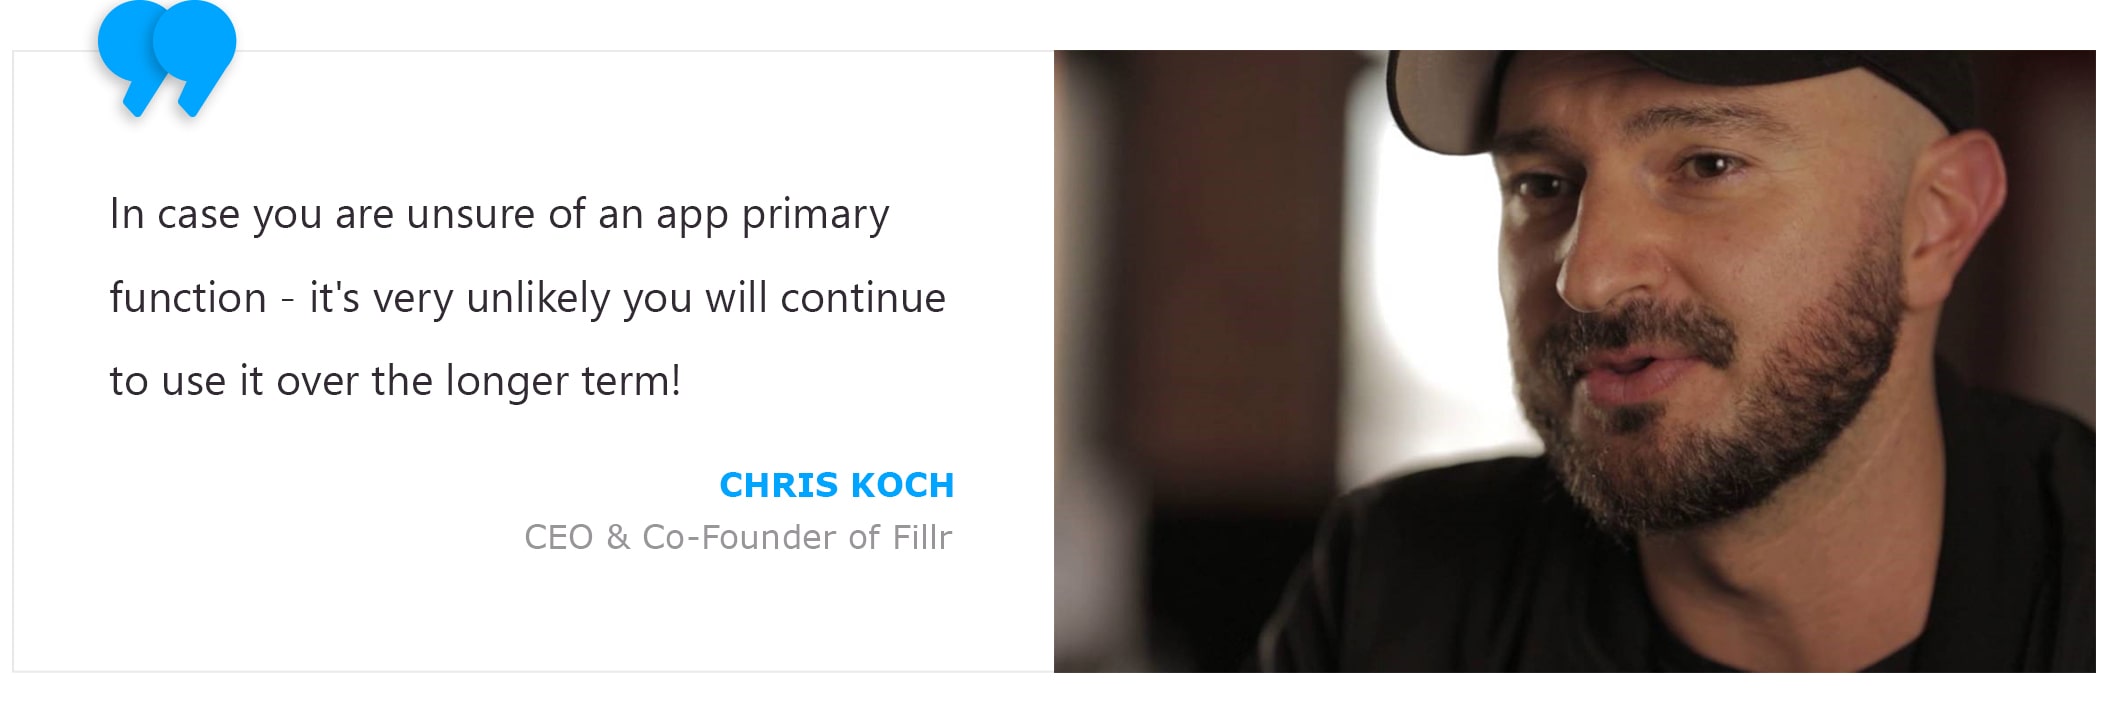 Chris Koch on Fillr's primary function